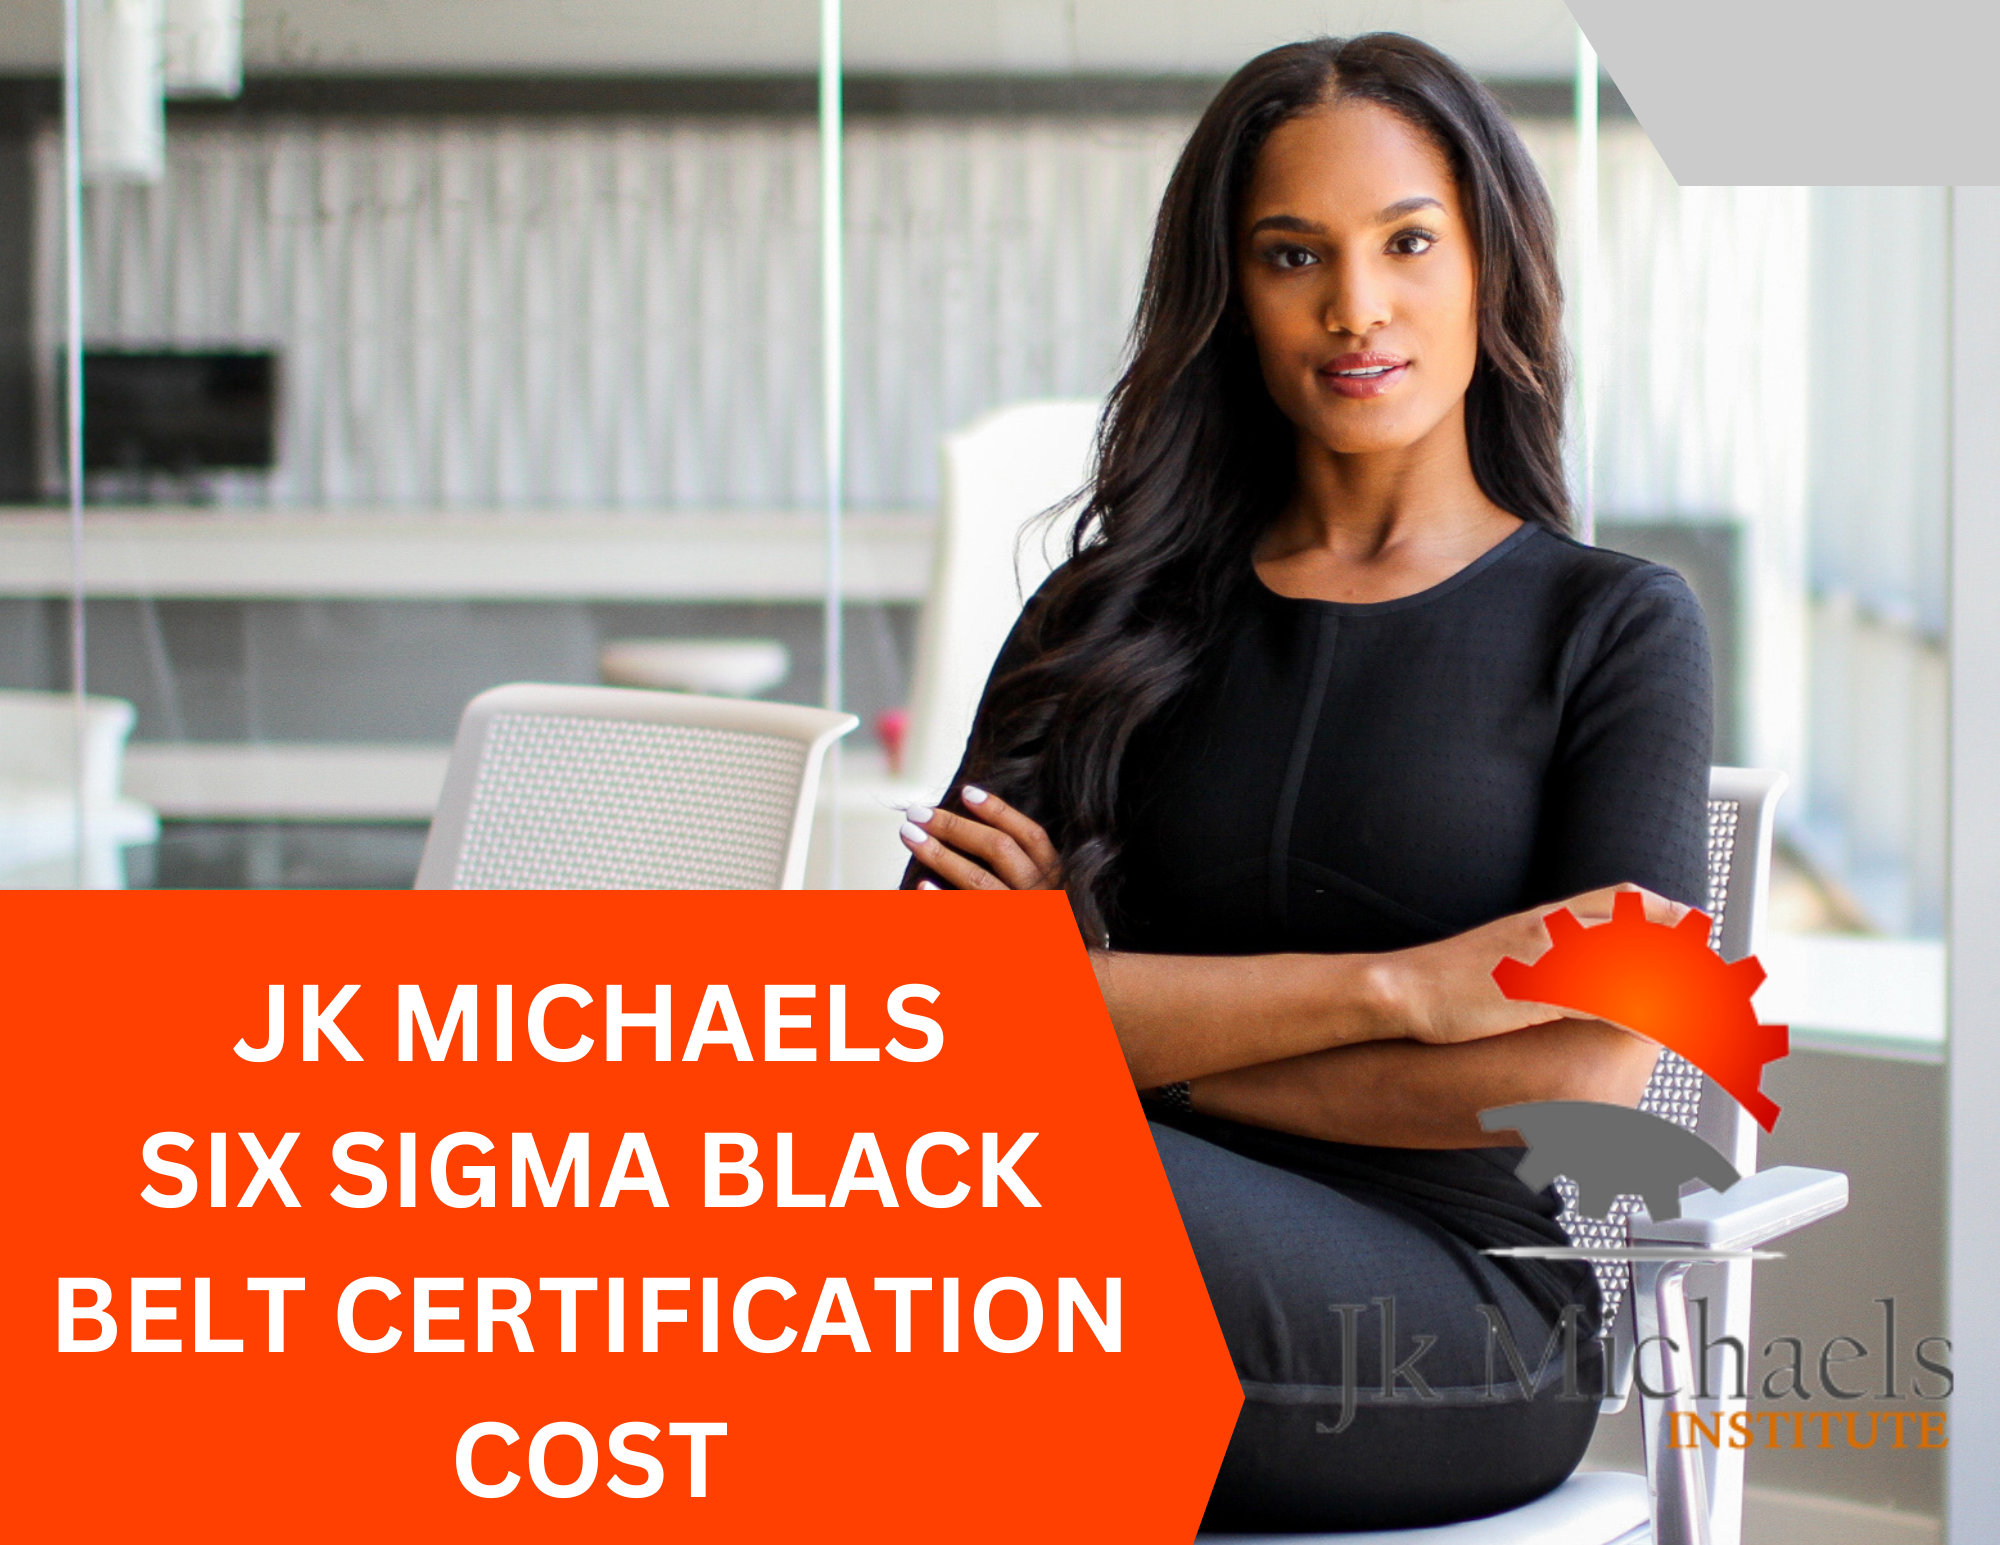 SIX SIGMA BLACK BELT CERTIFICATION COST